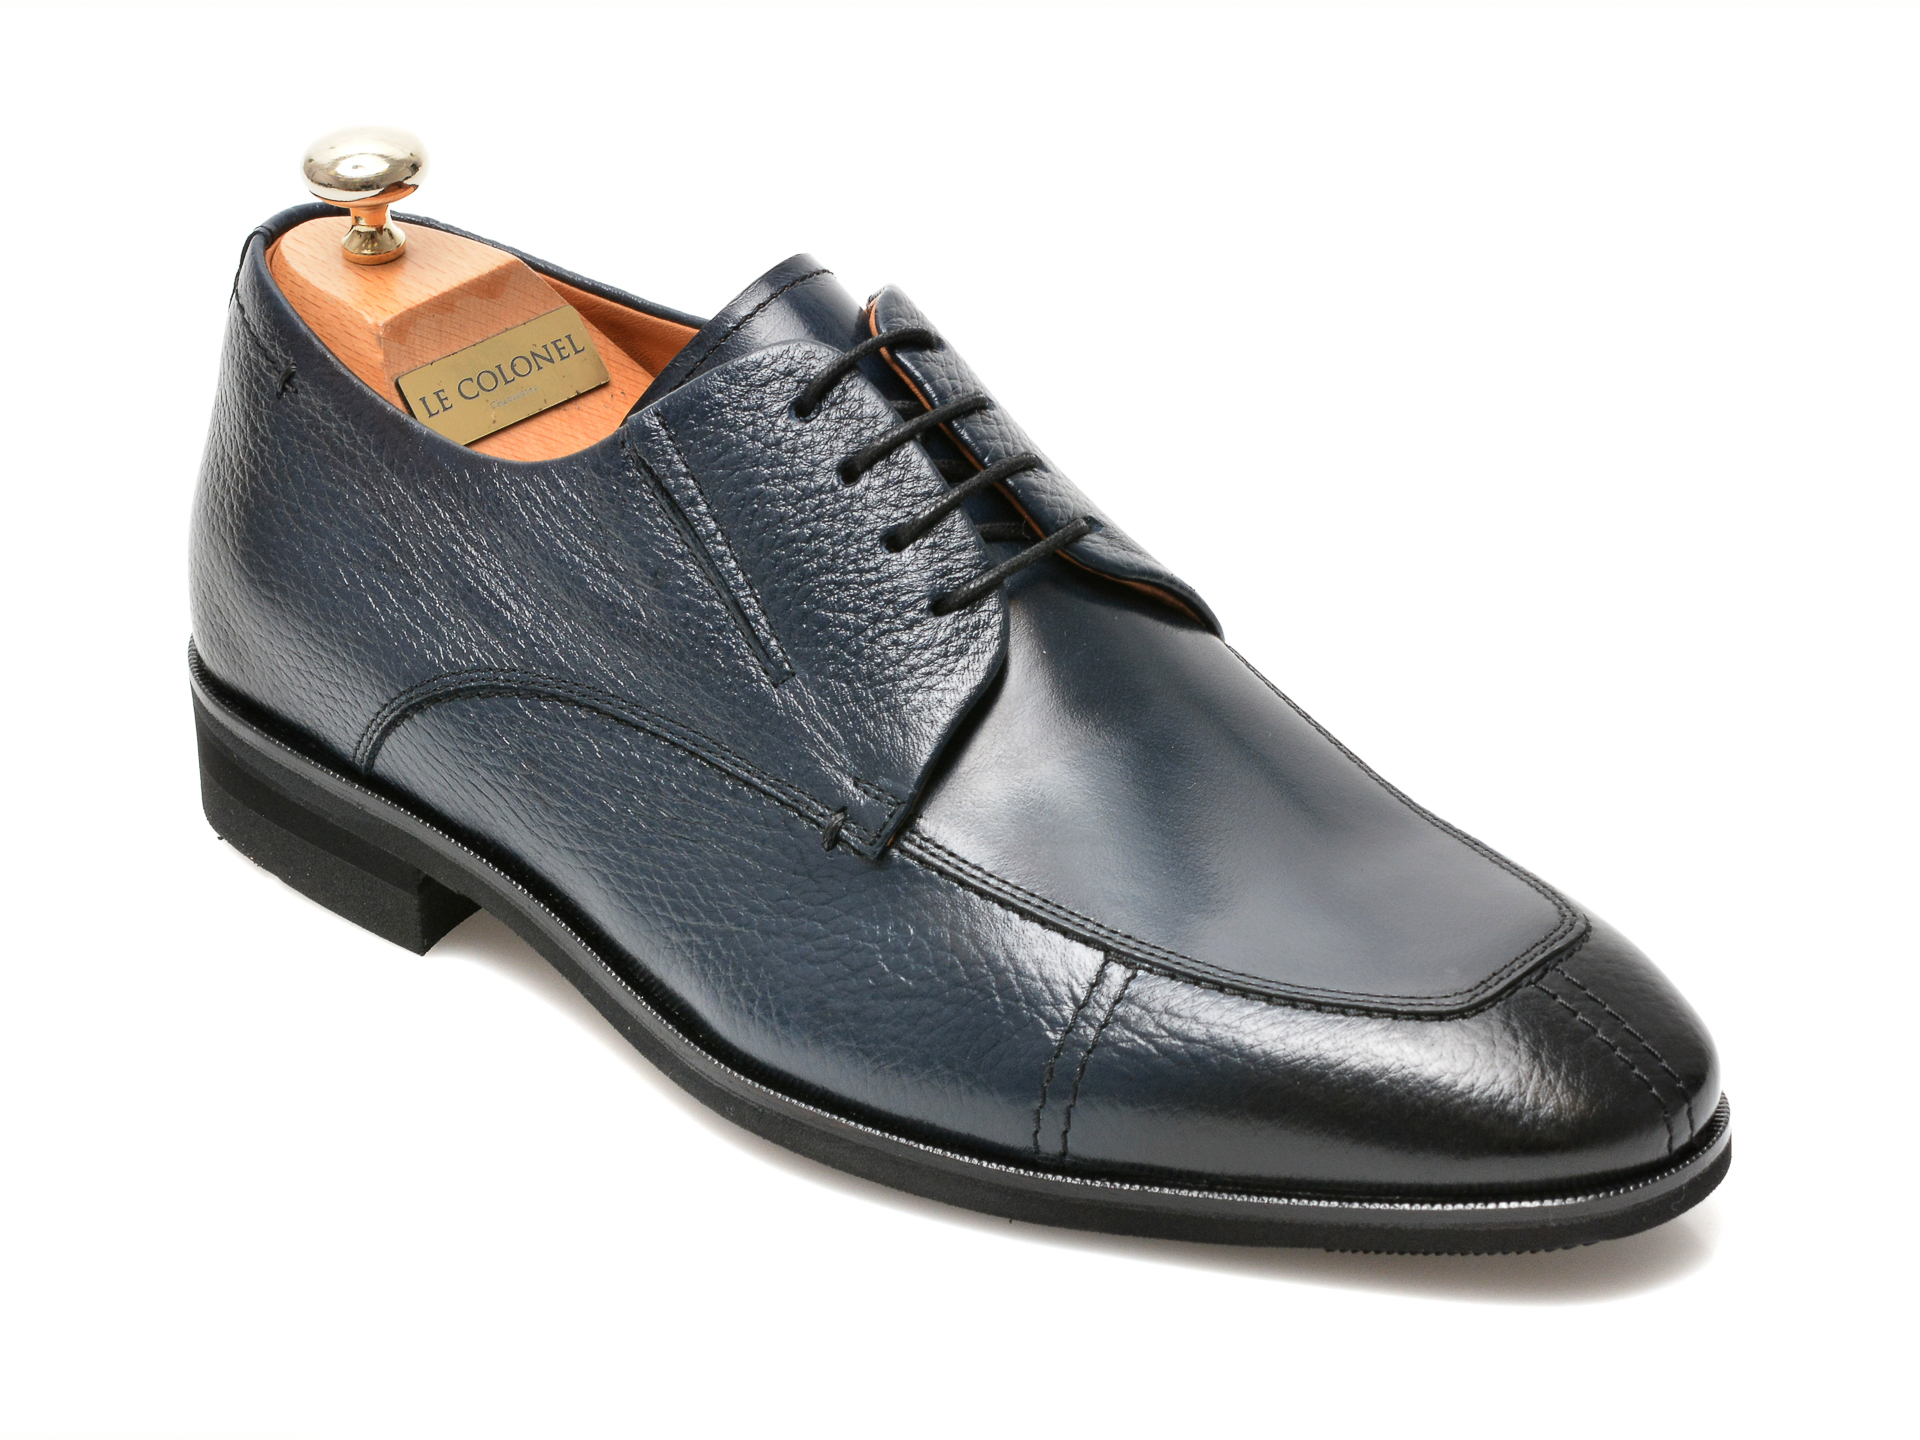 Poze Pantofi LE COLONEL bleumarin, 48761, din piele naturala otter.ro